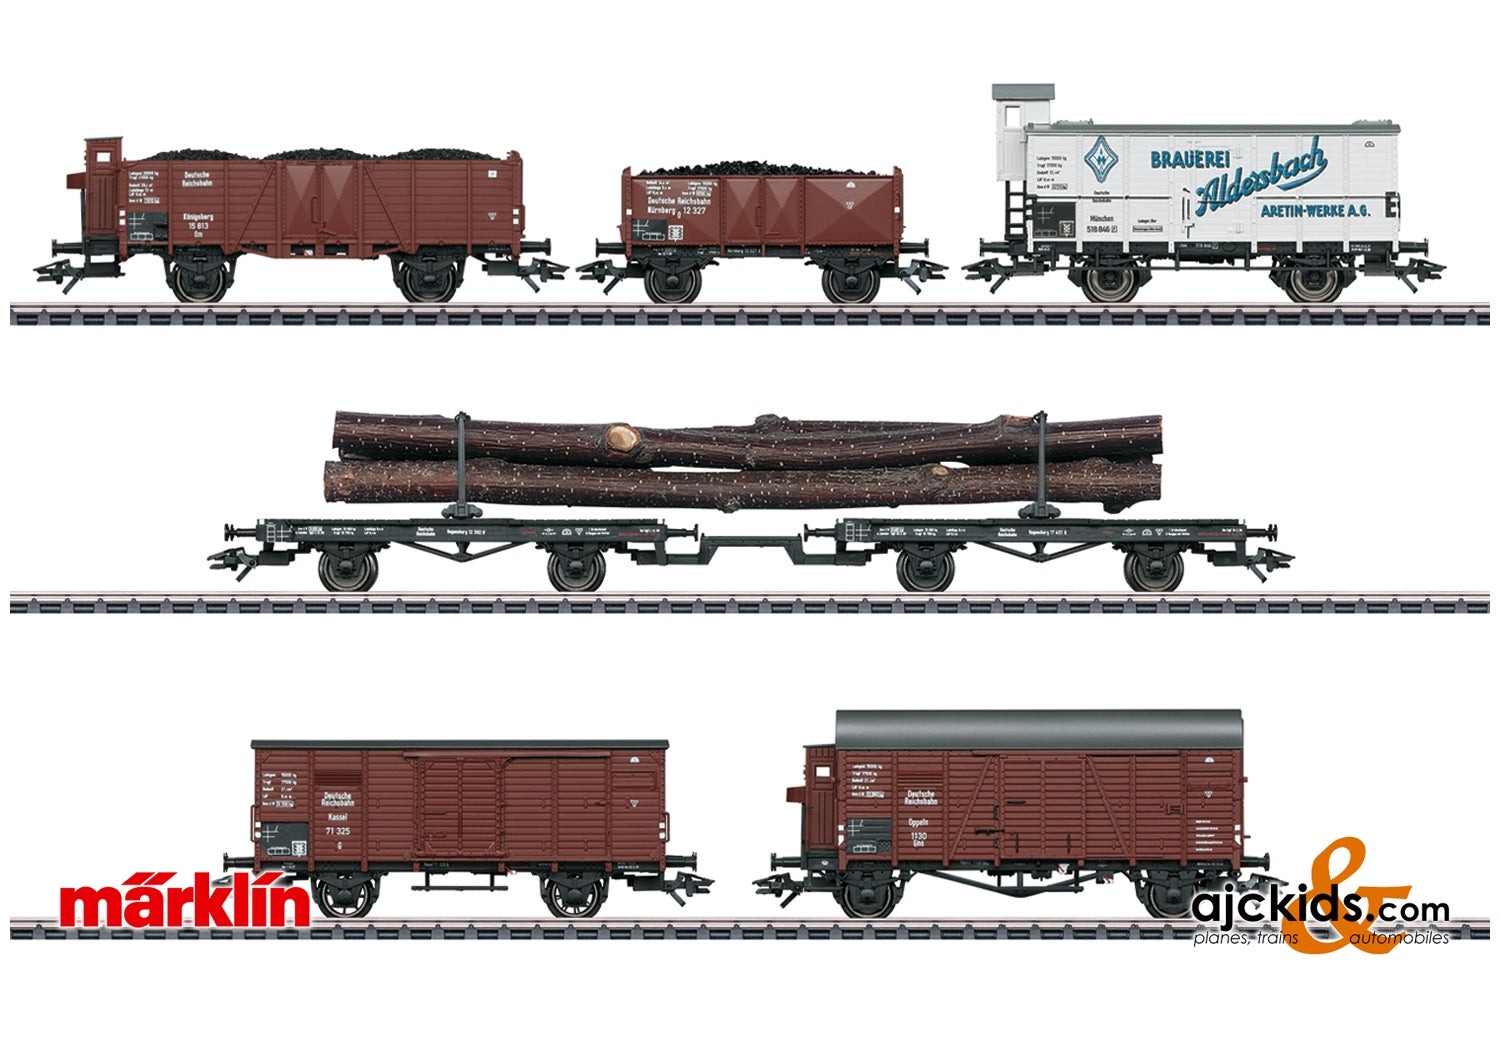 Marklin 46017 - Freight Car Set for the Class 95 Steam Locomotive